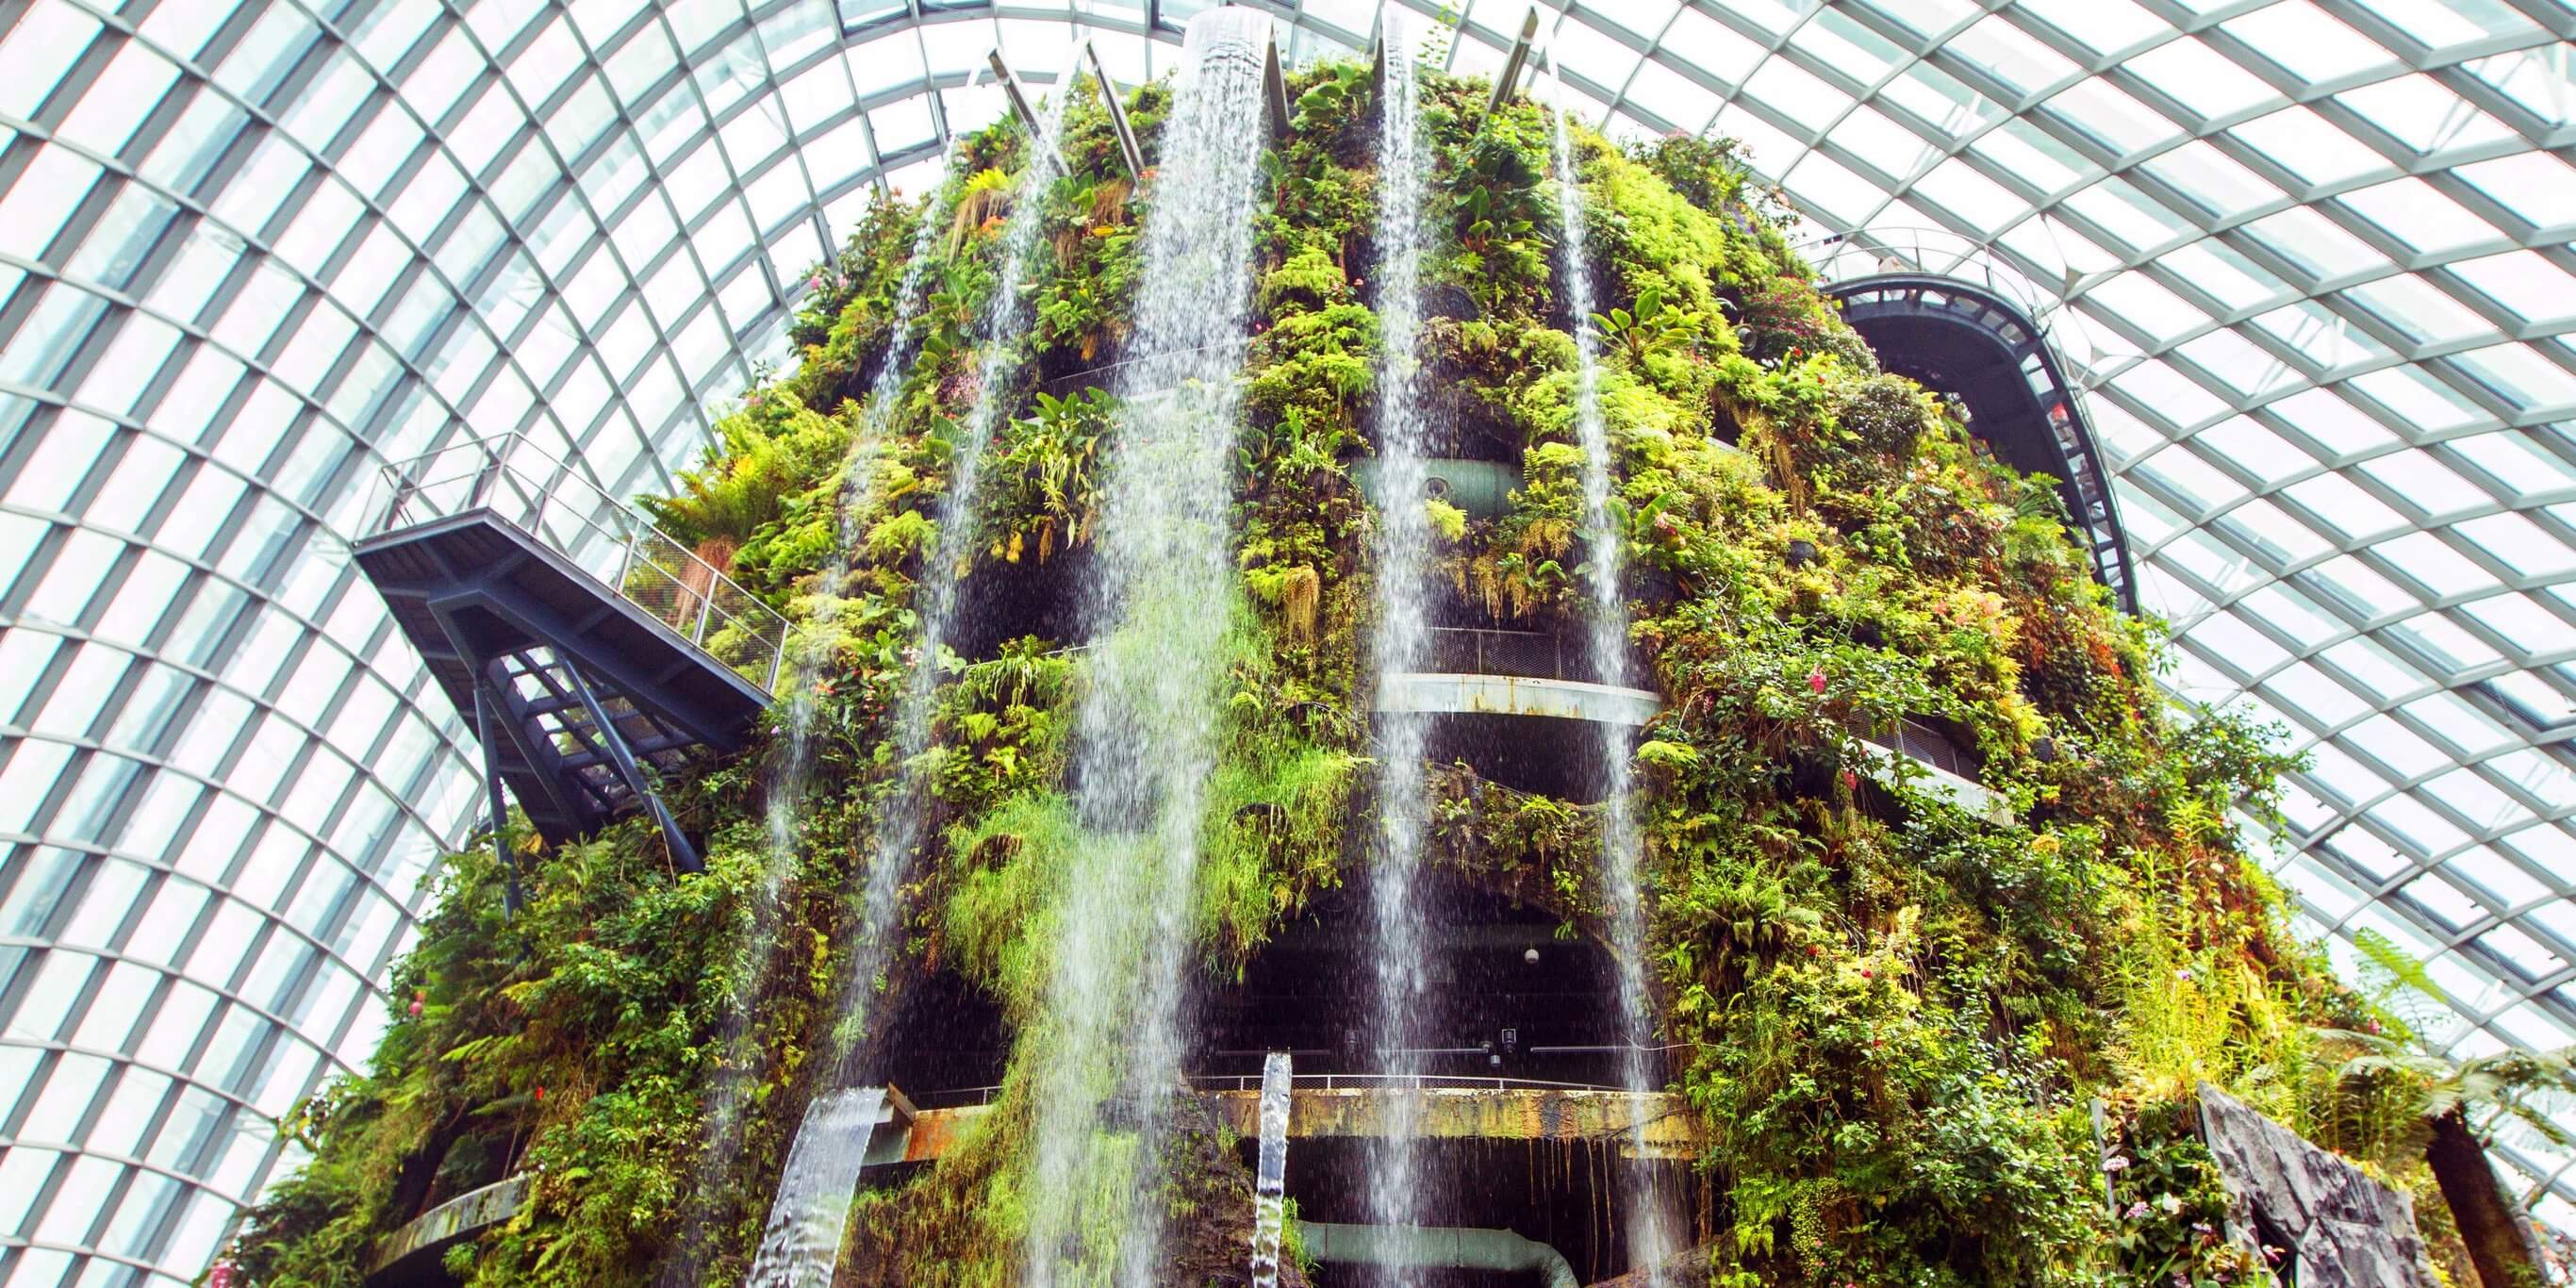 Indoor Waterfall In Singapore